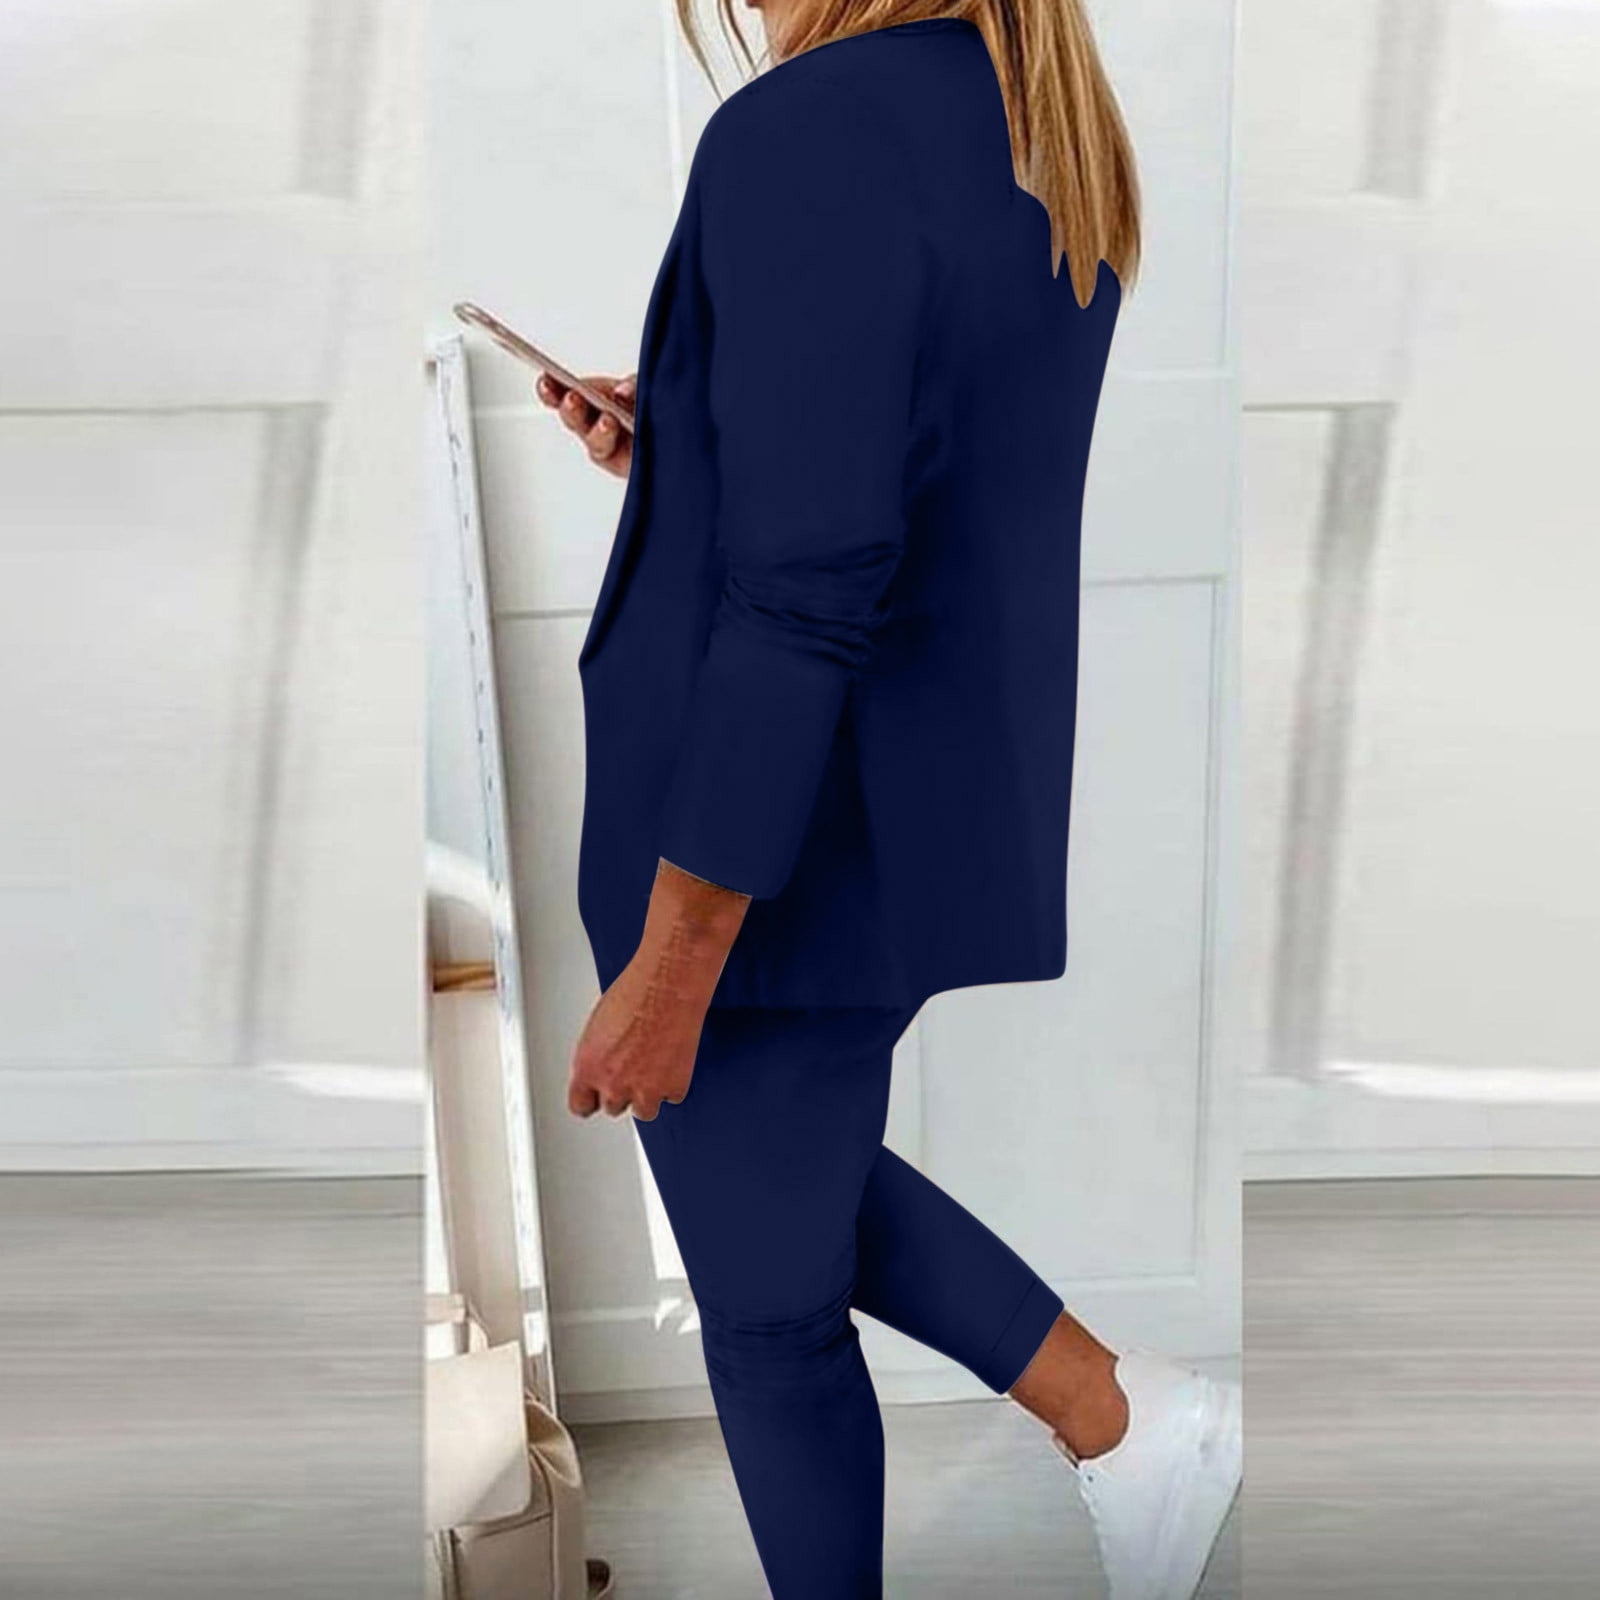 REORIAFEE Blazer Sets Women Outfits Disco Outfits Women's Long Sleeve Suit  Pants Casual Elegant Business Suit Dark Blue L 